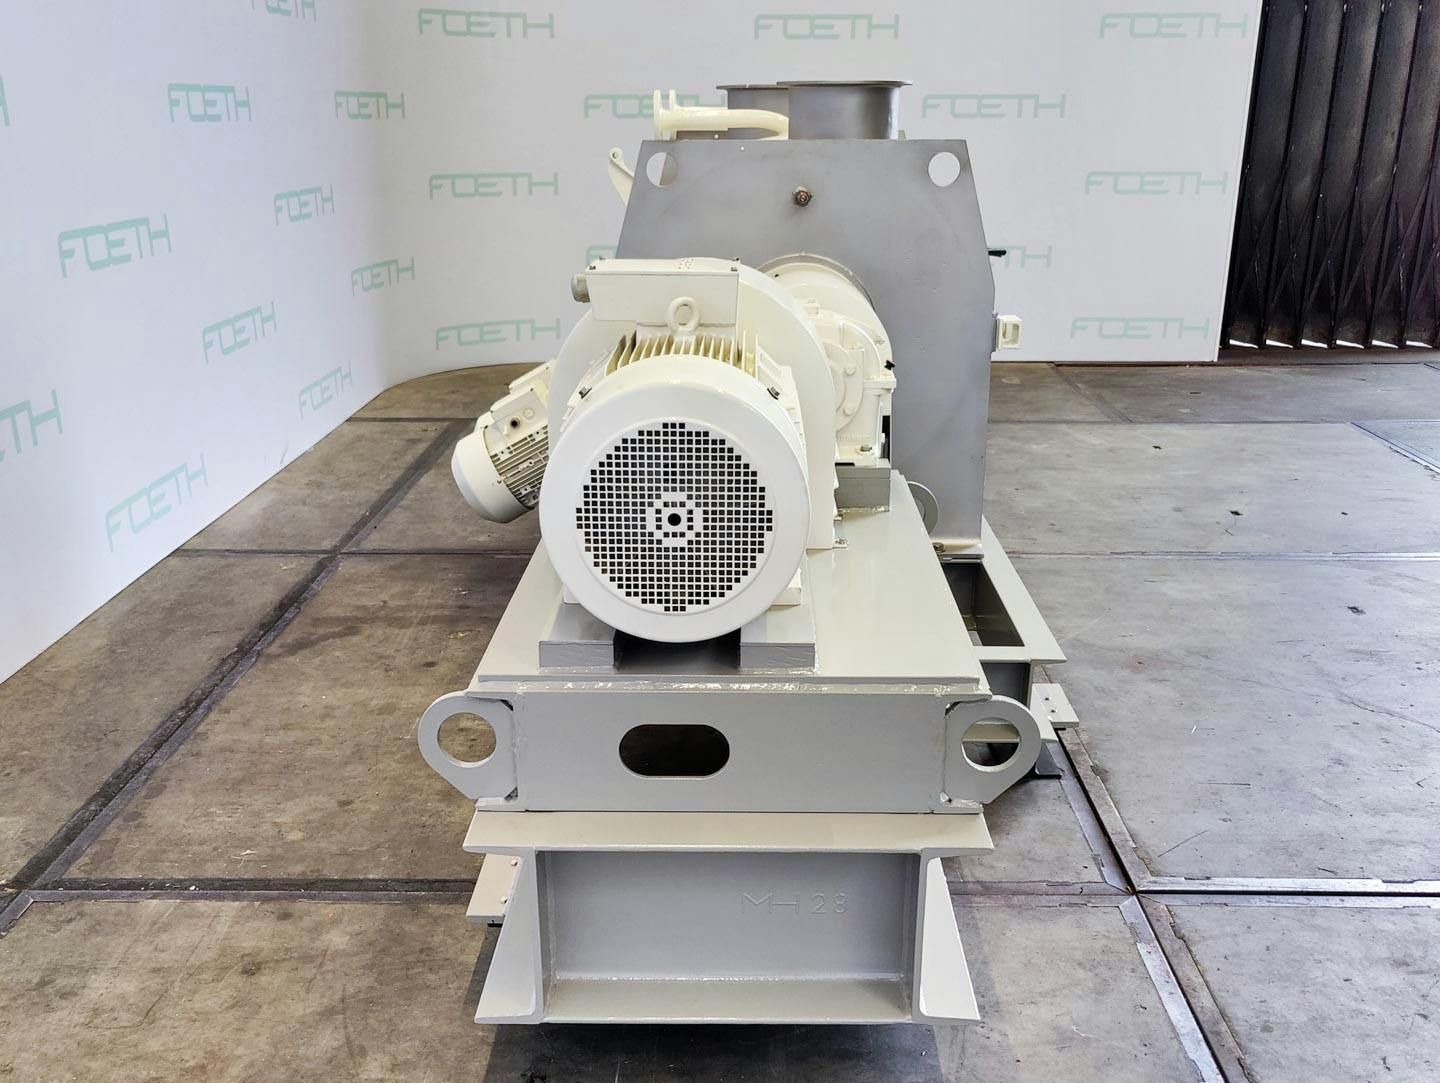 Loedige FKM-600 - Misturador turbo para pós - image 4